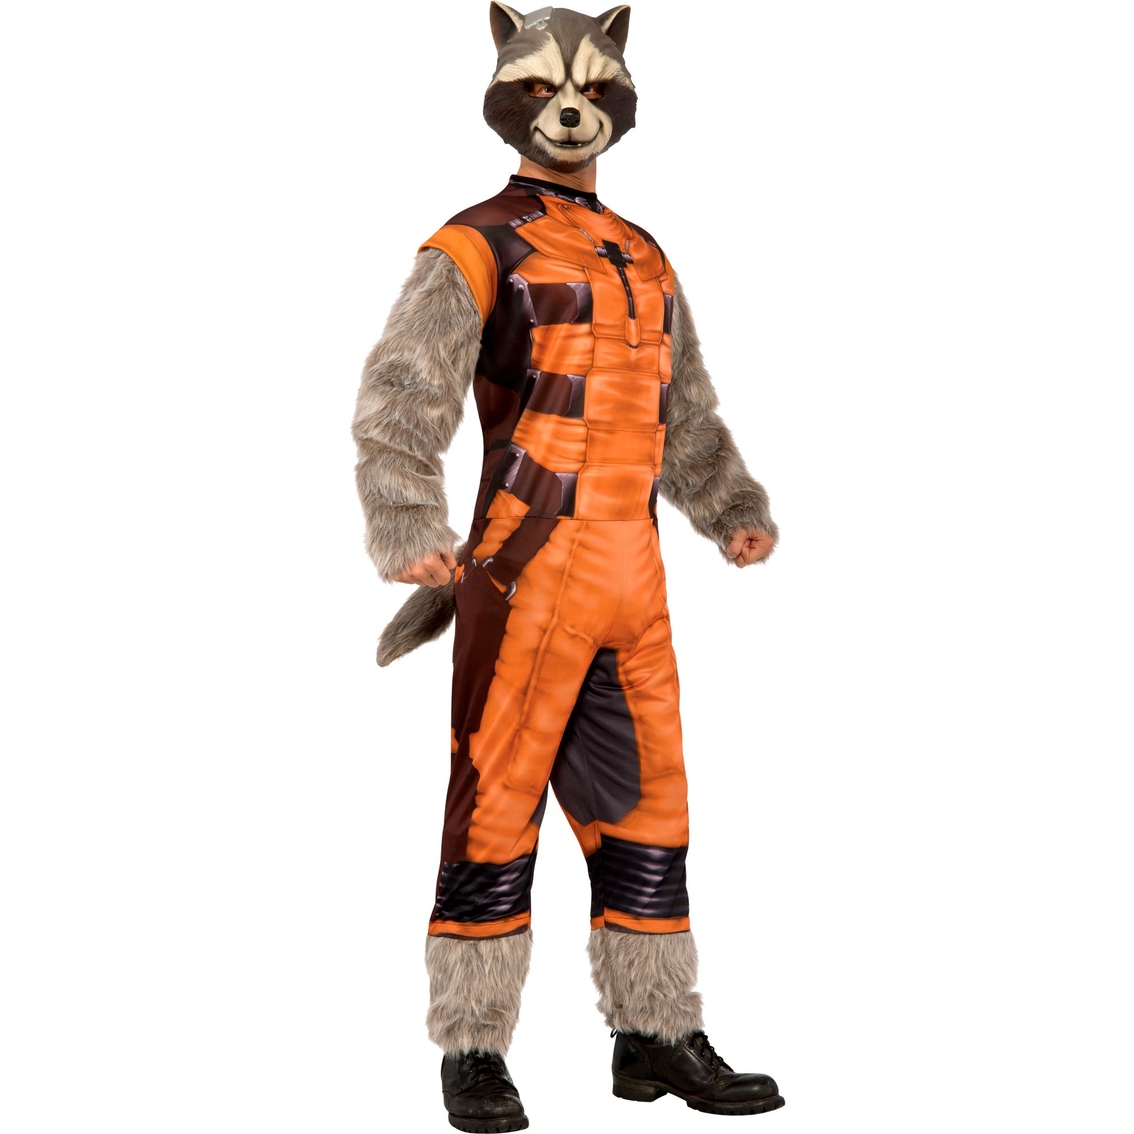 Adult rocket racoon costume